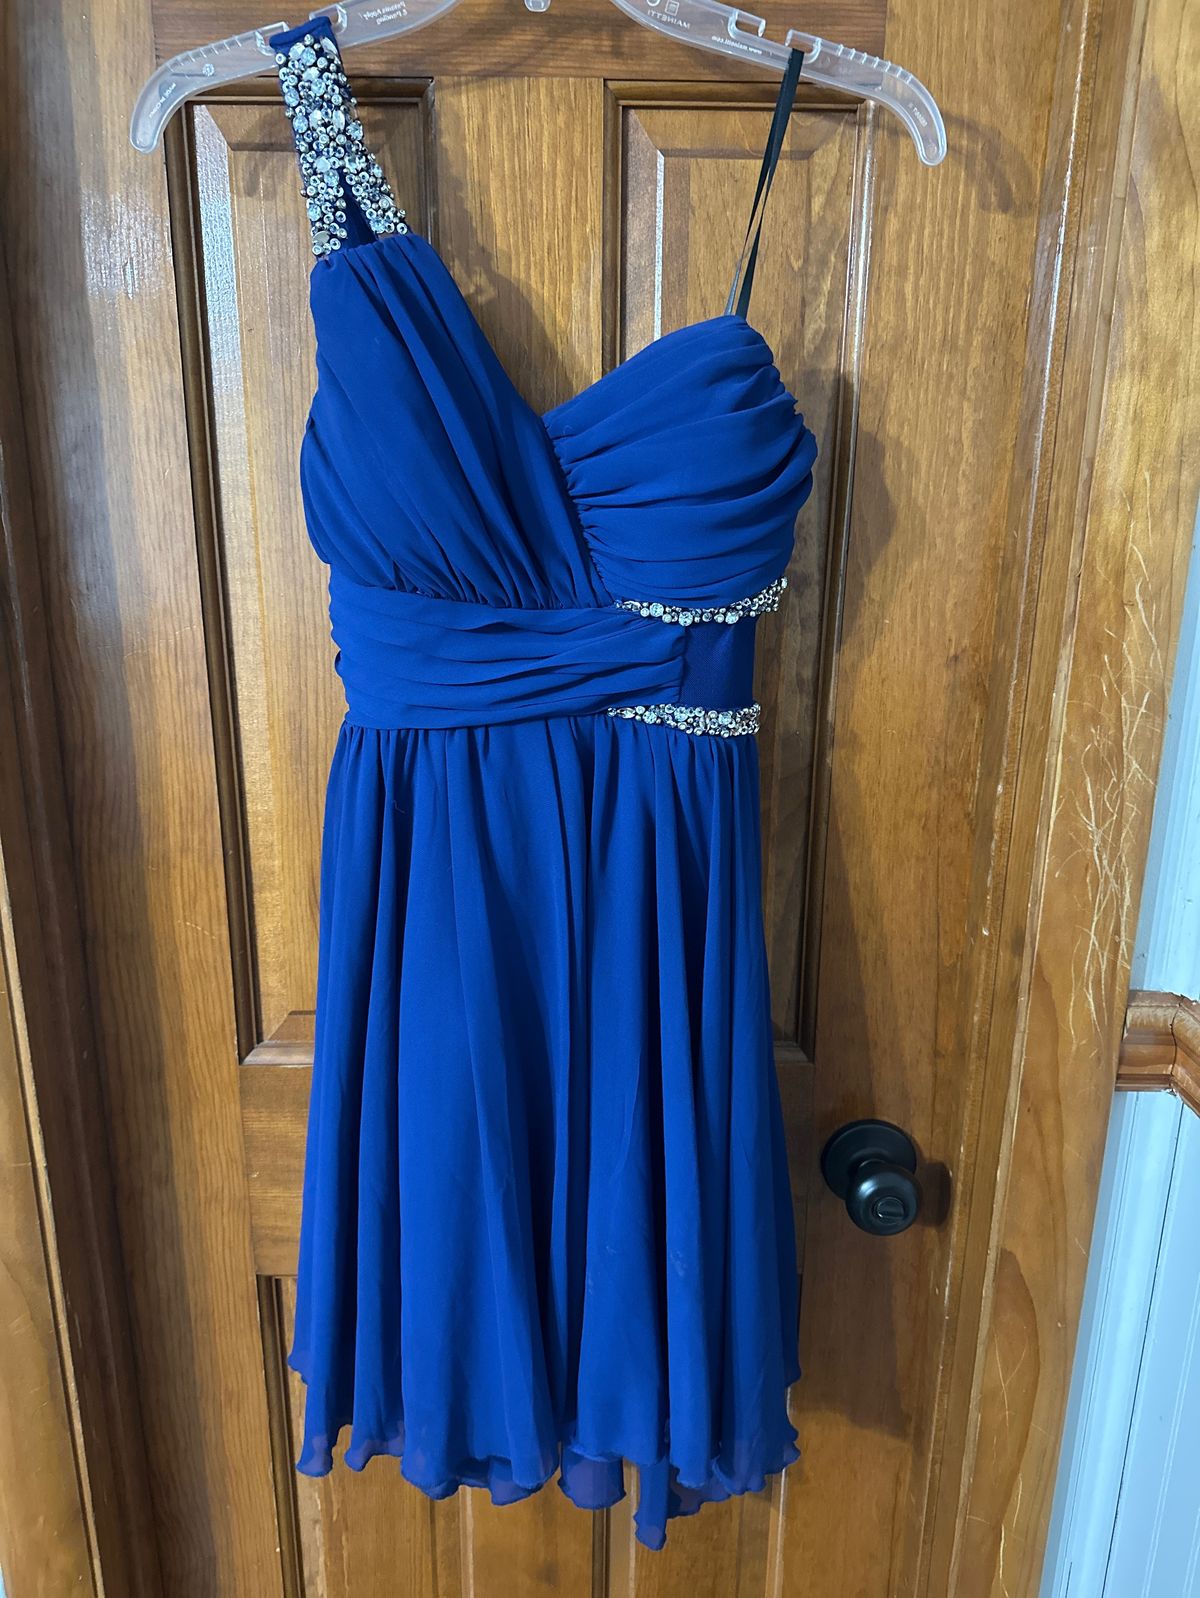 blue cocktail dresses for juniors